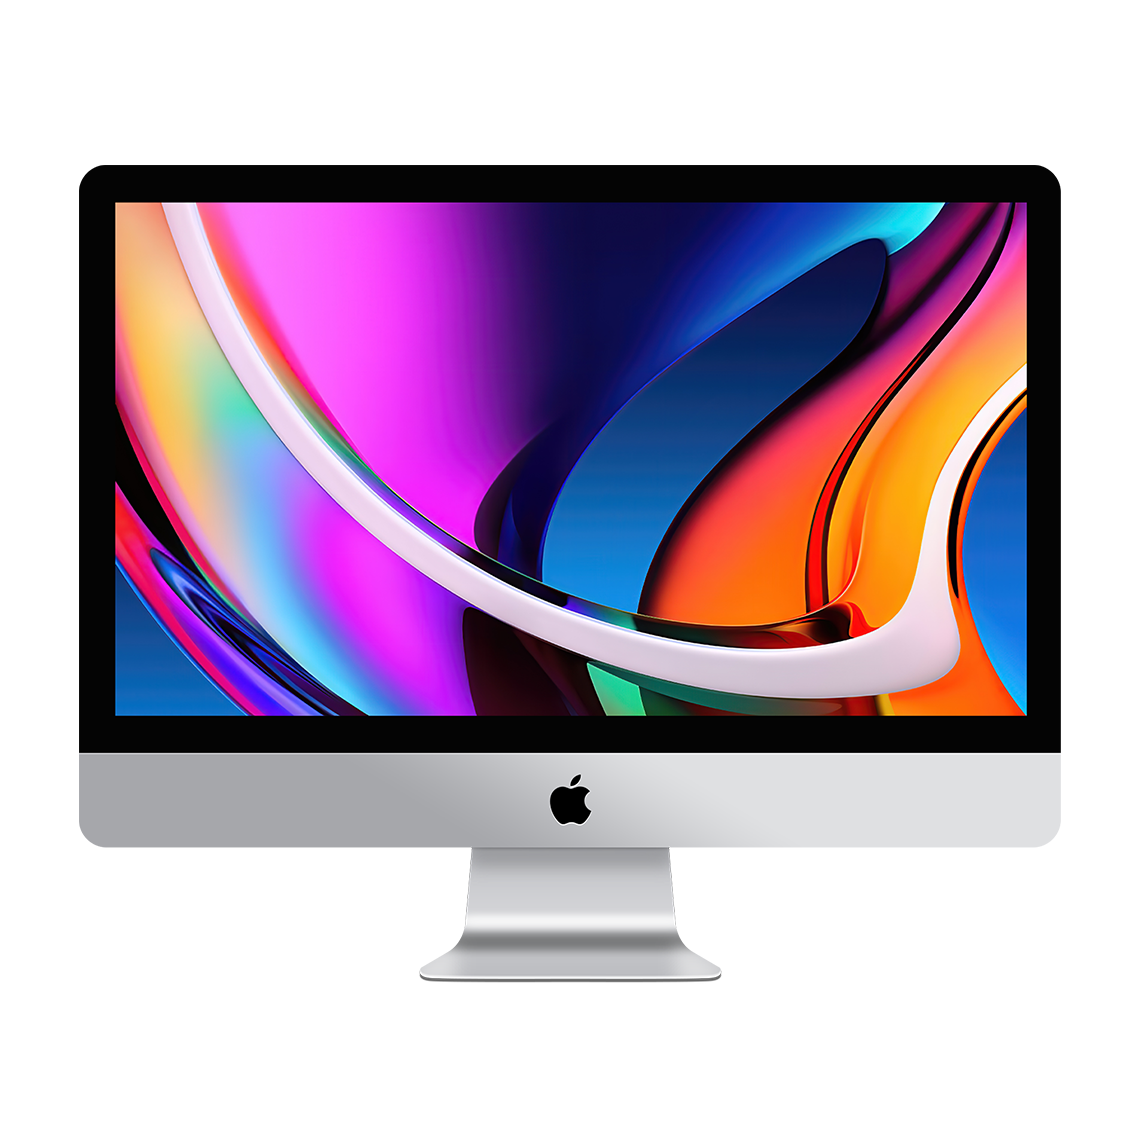 2020 iMac 27-inch 5K - Intel Core i7, 8GB, 1TB Flash, Radeon Pro 5700 8GB, Grade A